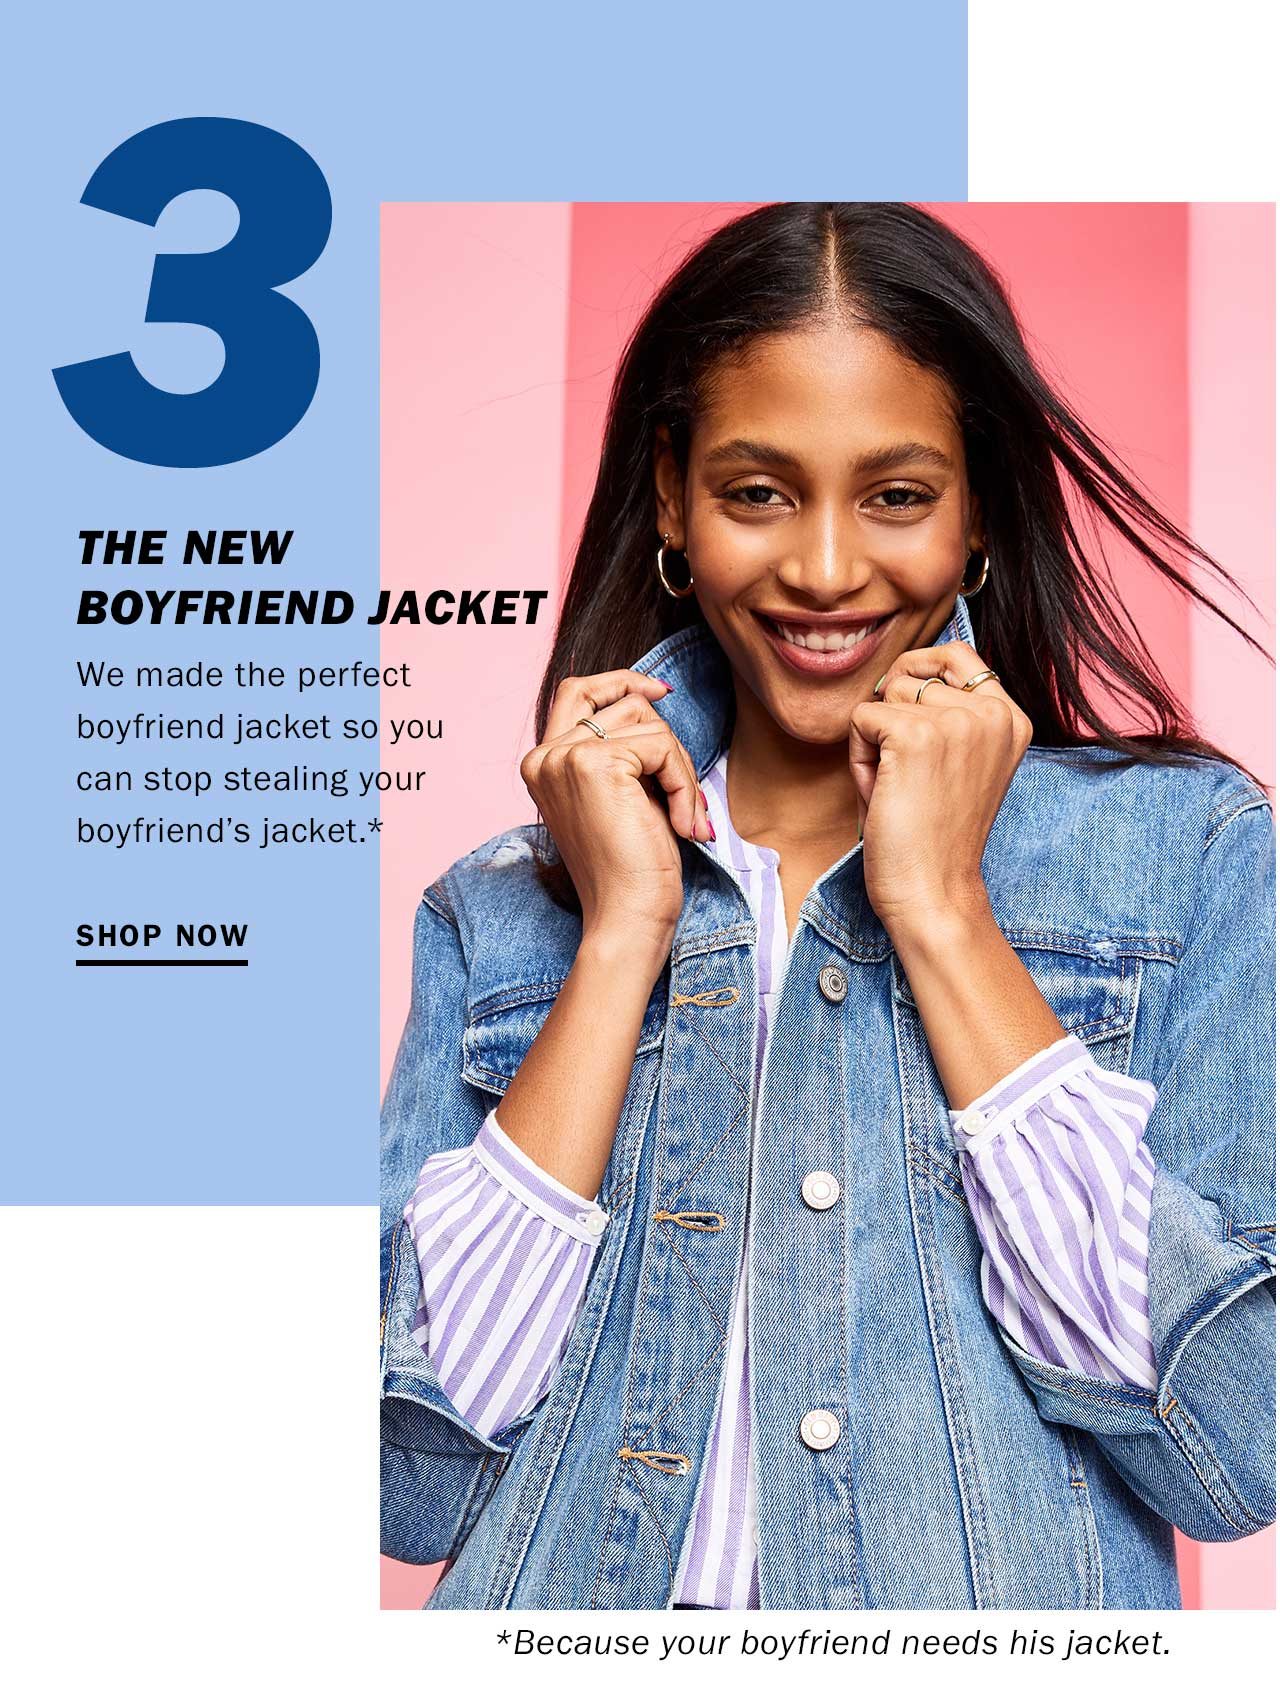 3 | The new boyfriend jacket